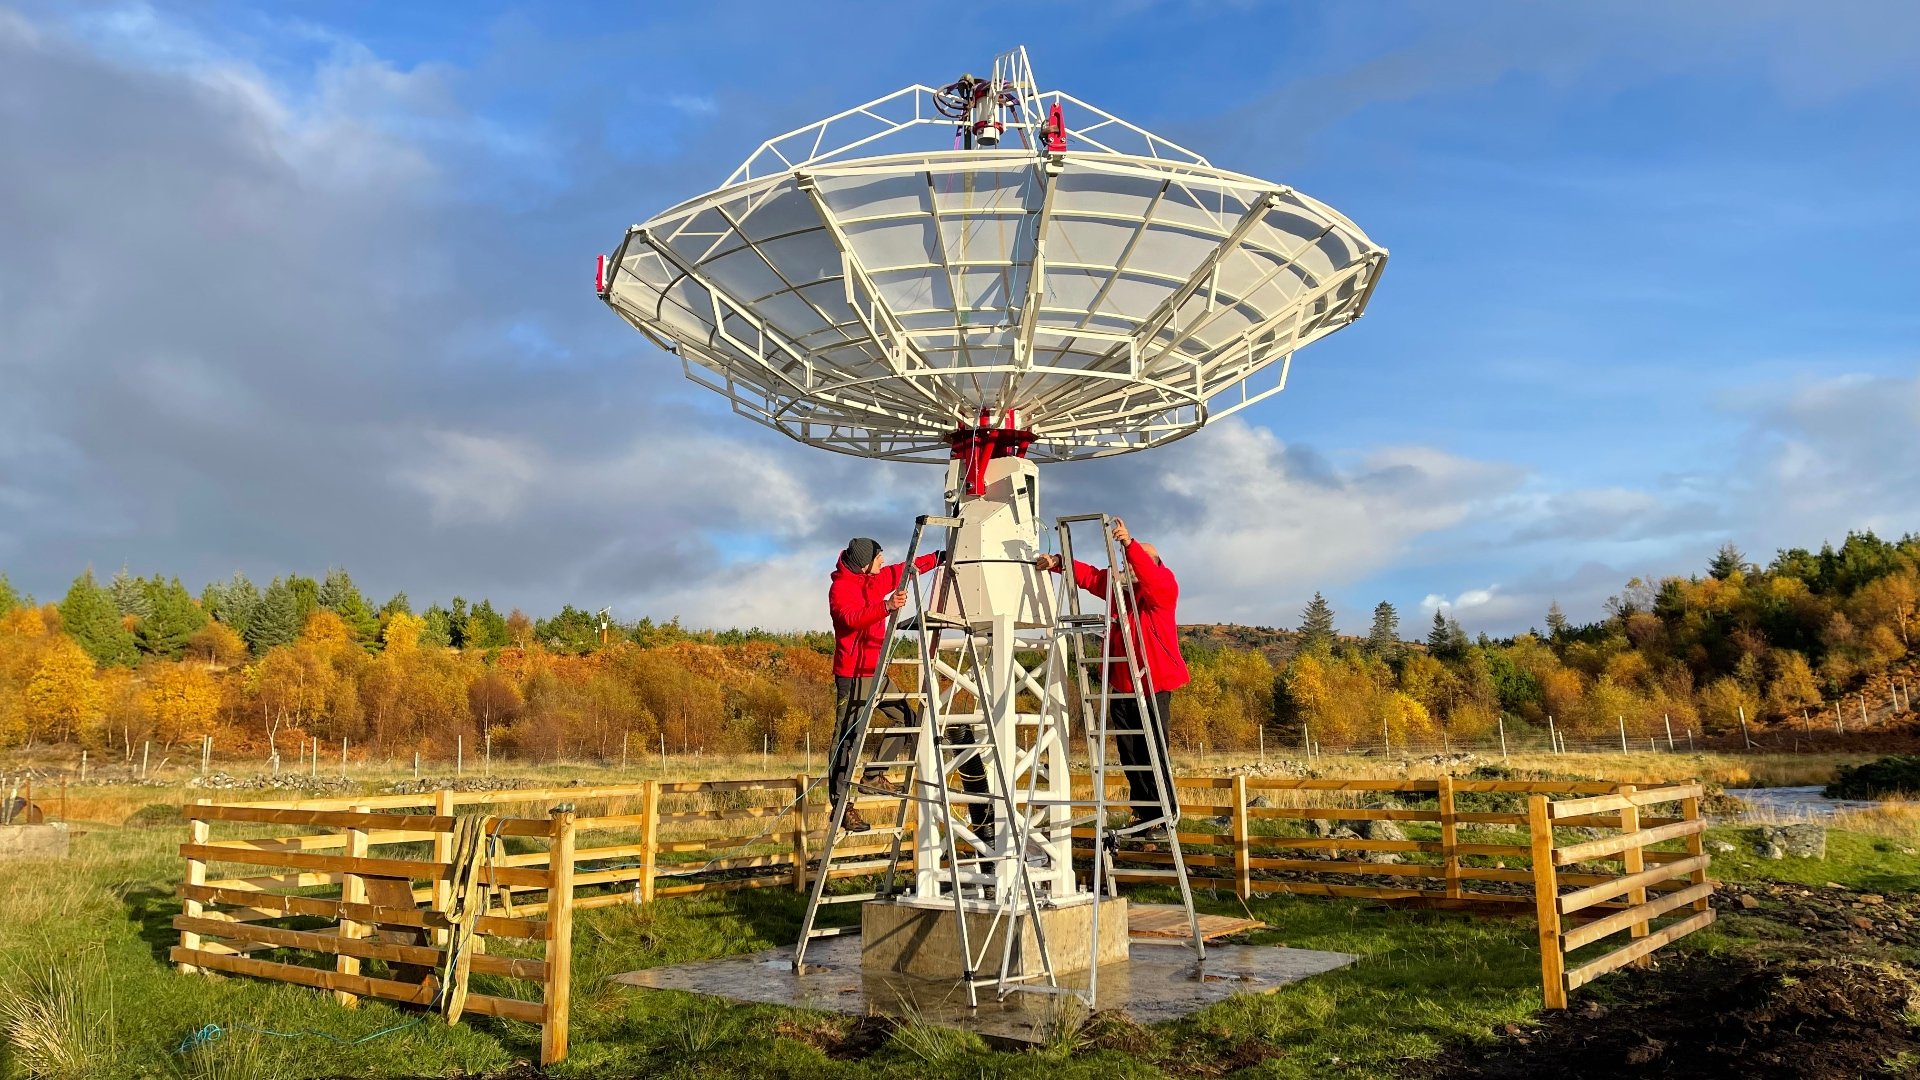 Radio2Space radio telescopes and antenna systems